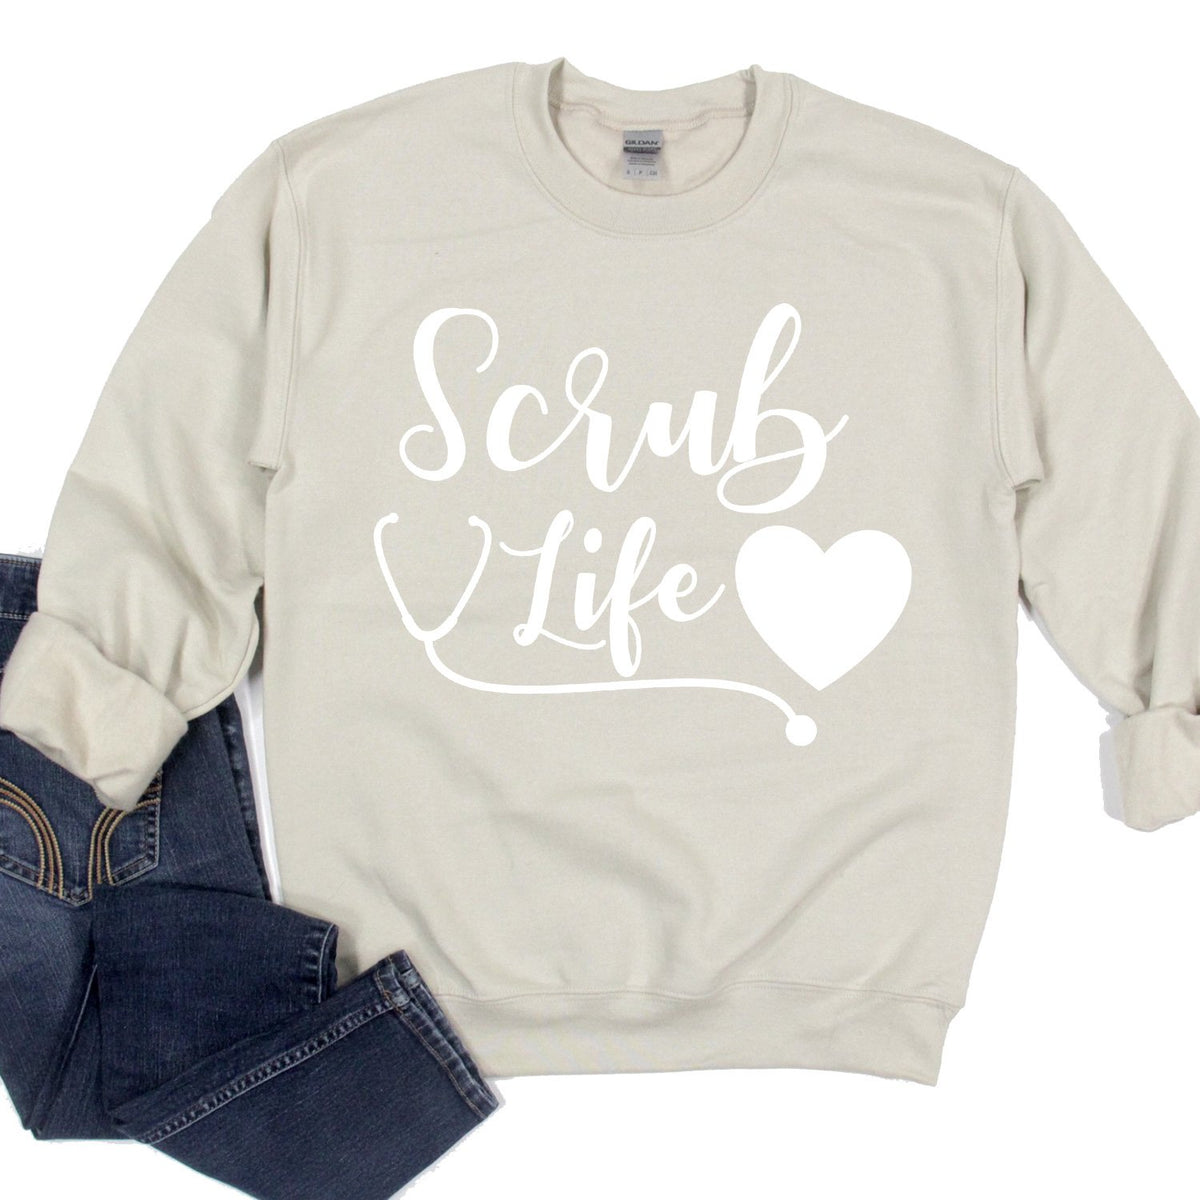 Scrub Life with Stethoscope and Heart - Long Sleeve Heavy Crewneck Sweatshirt